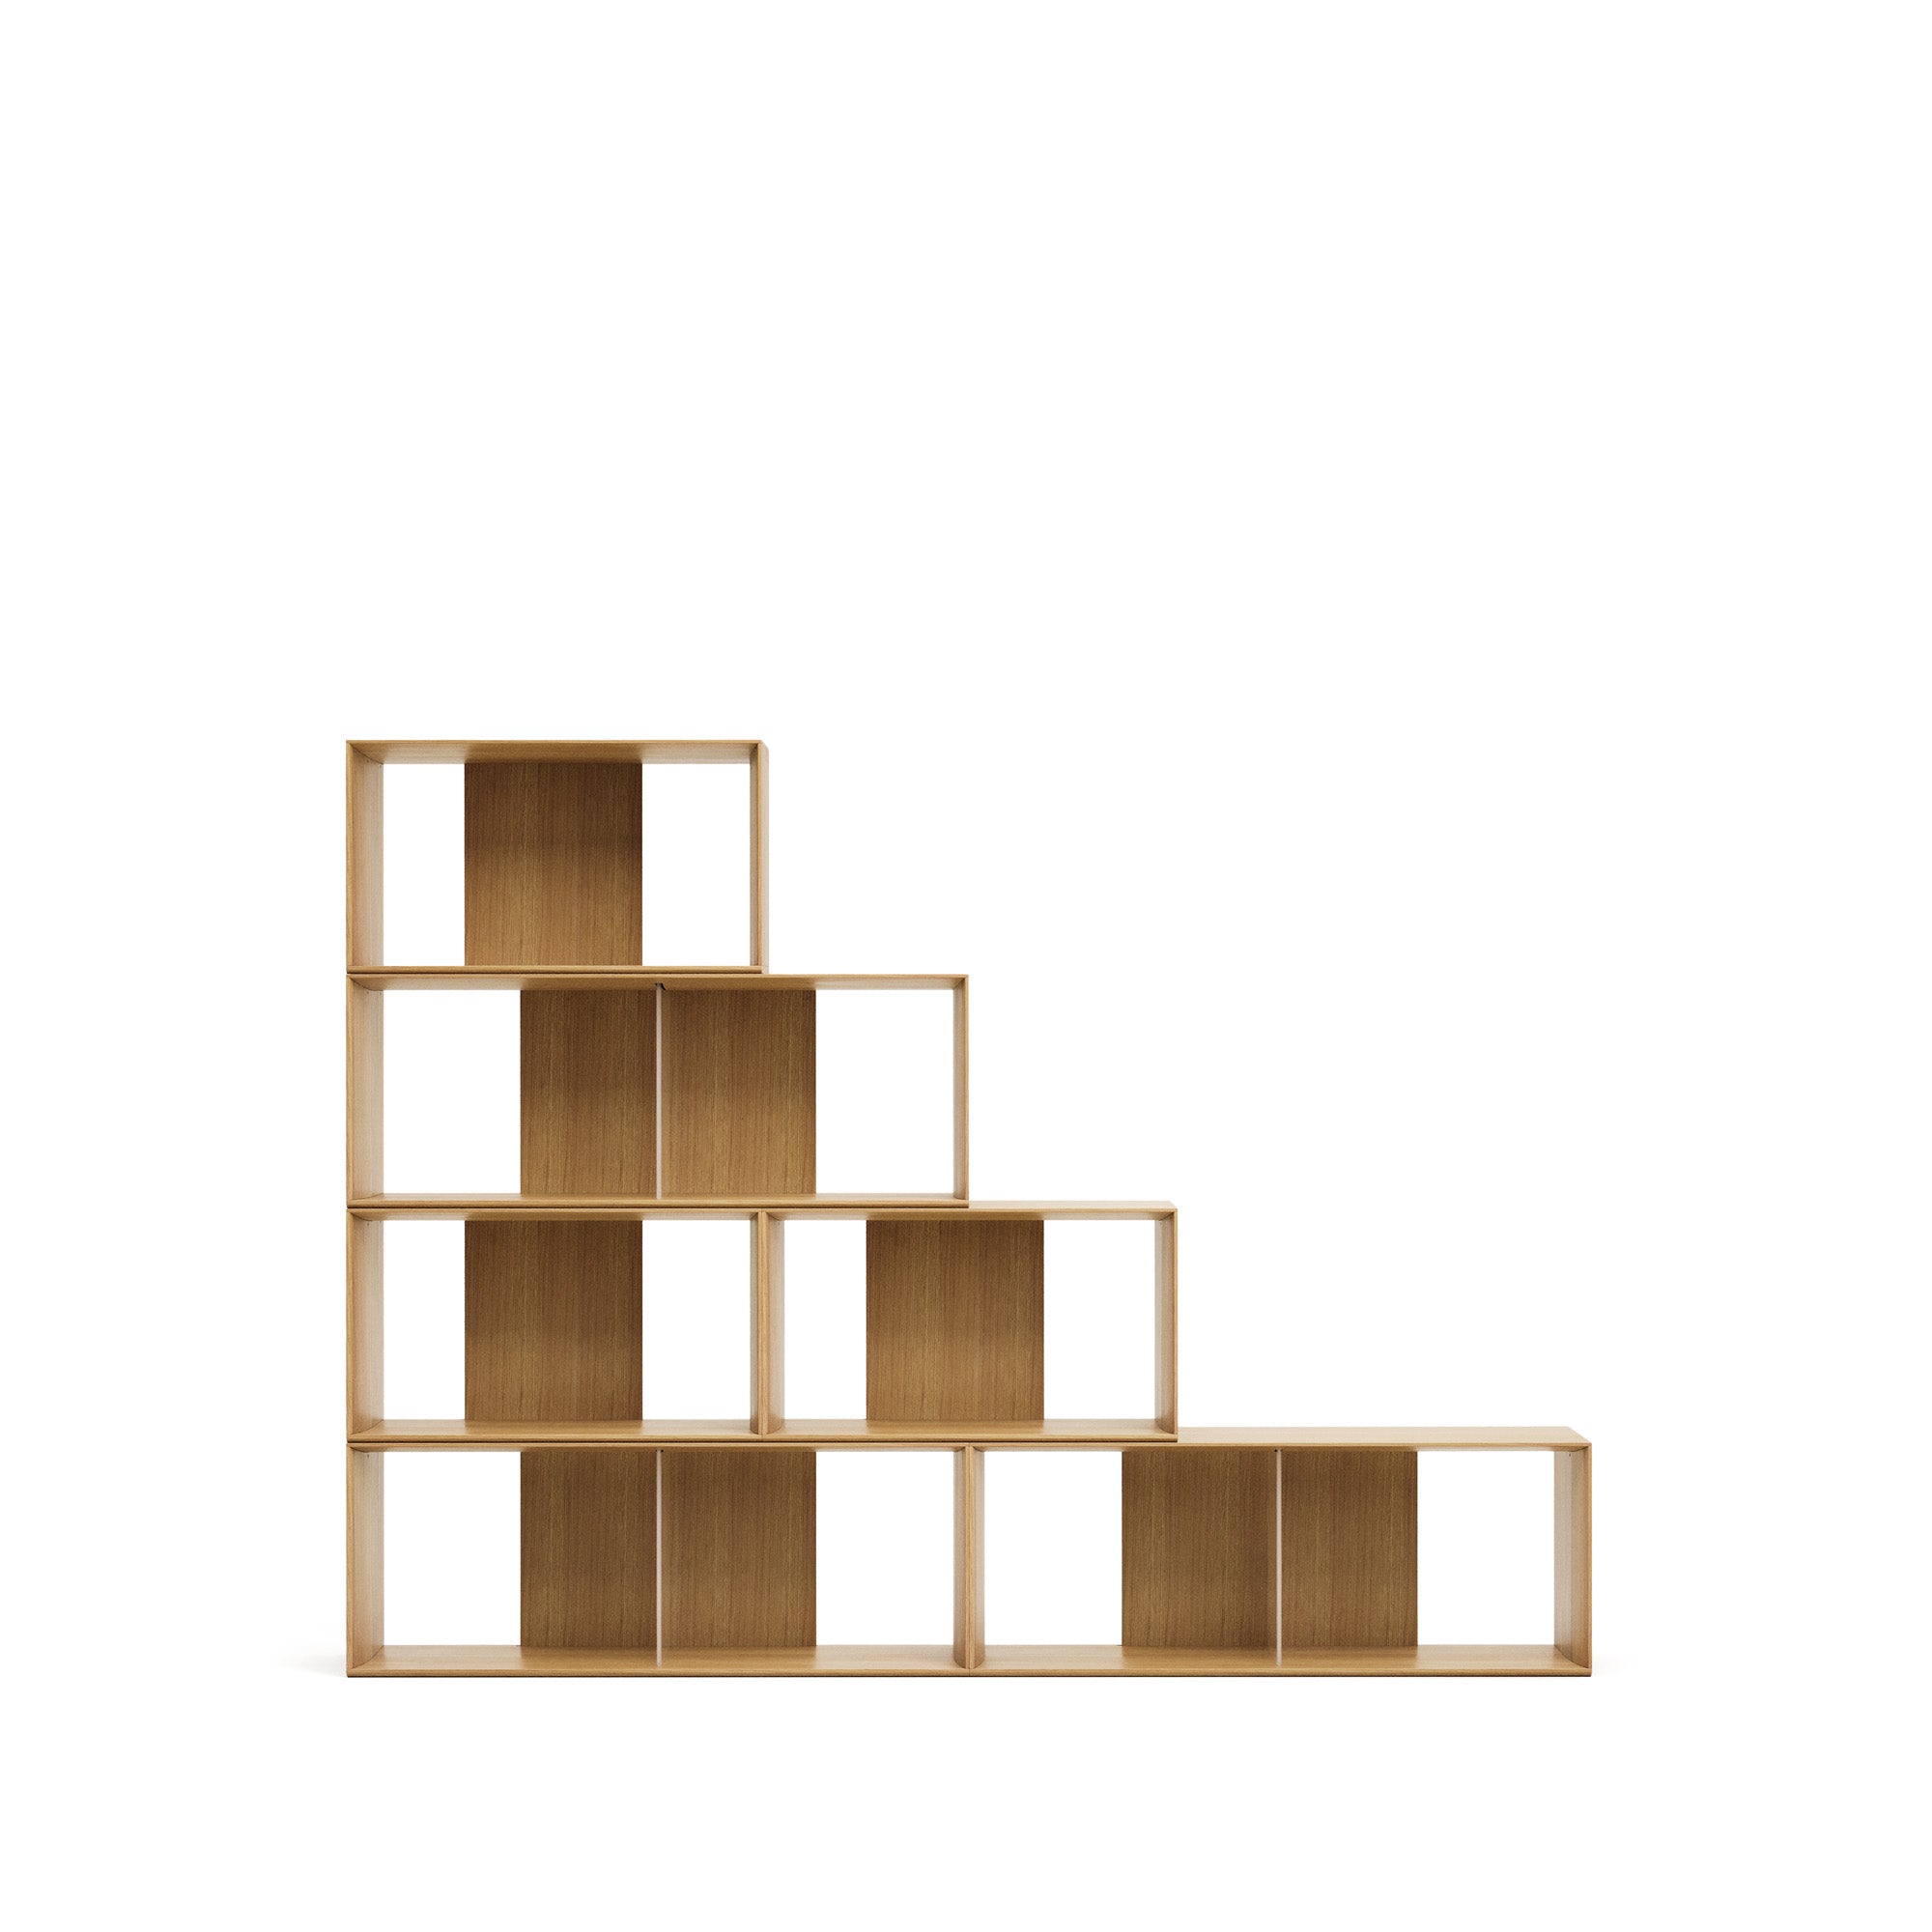 Litto set of 6 modular shelving units in oak wood veneer, 168 x 114 cm